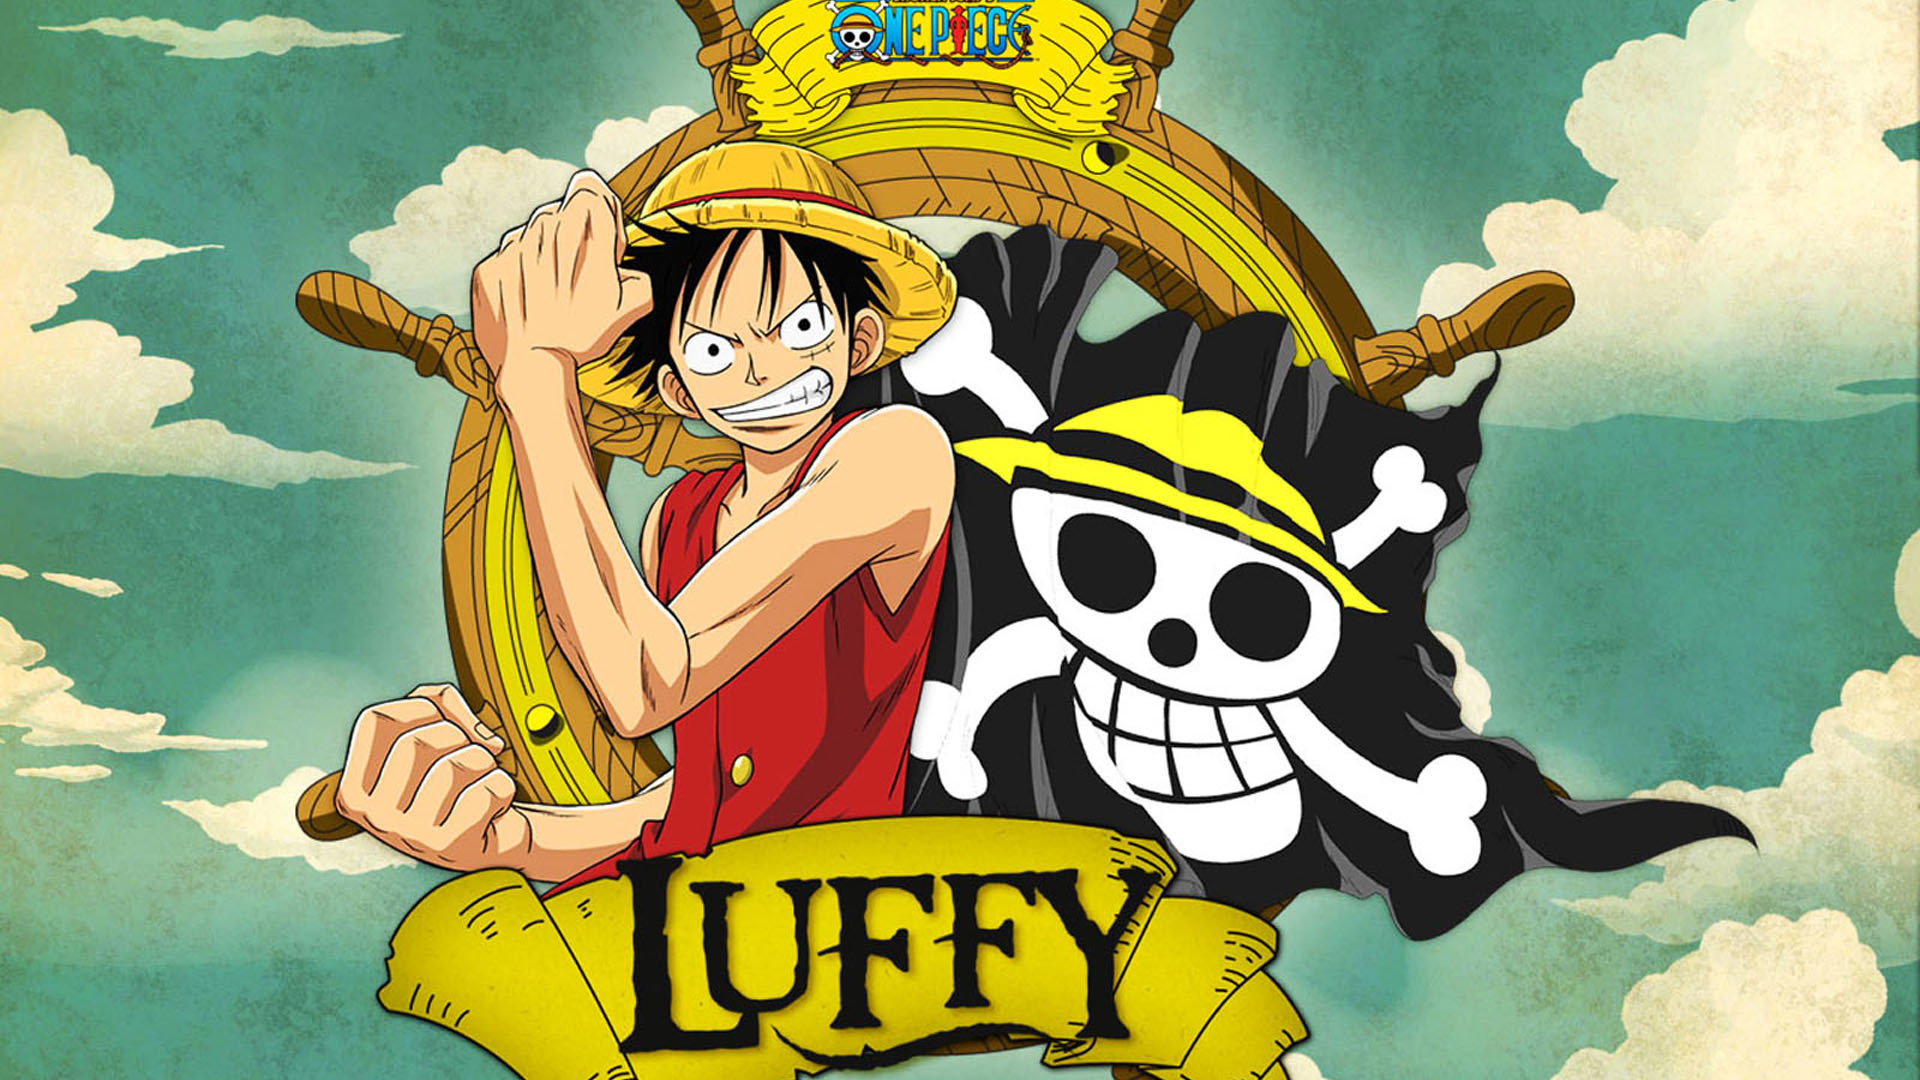 Wallpaper Anime One Piece 3d Image Num 39